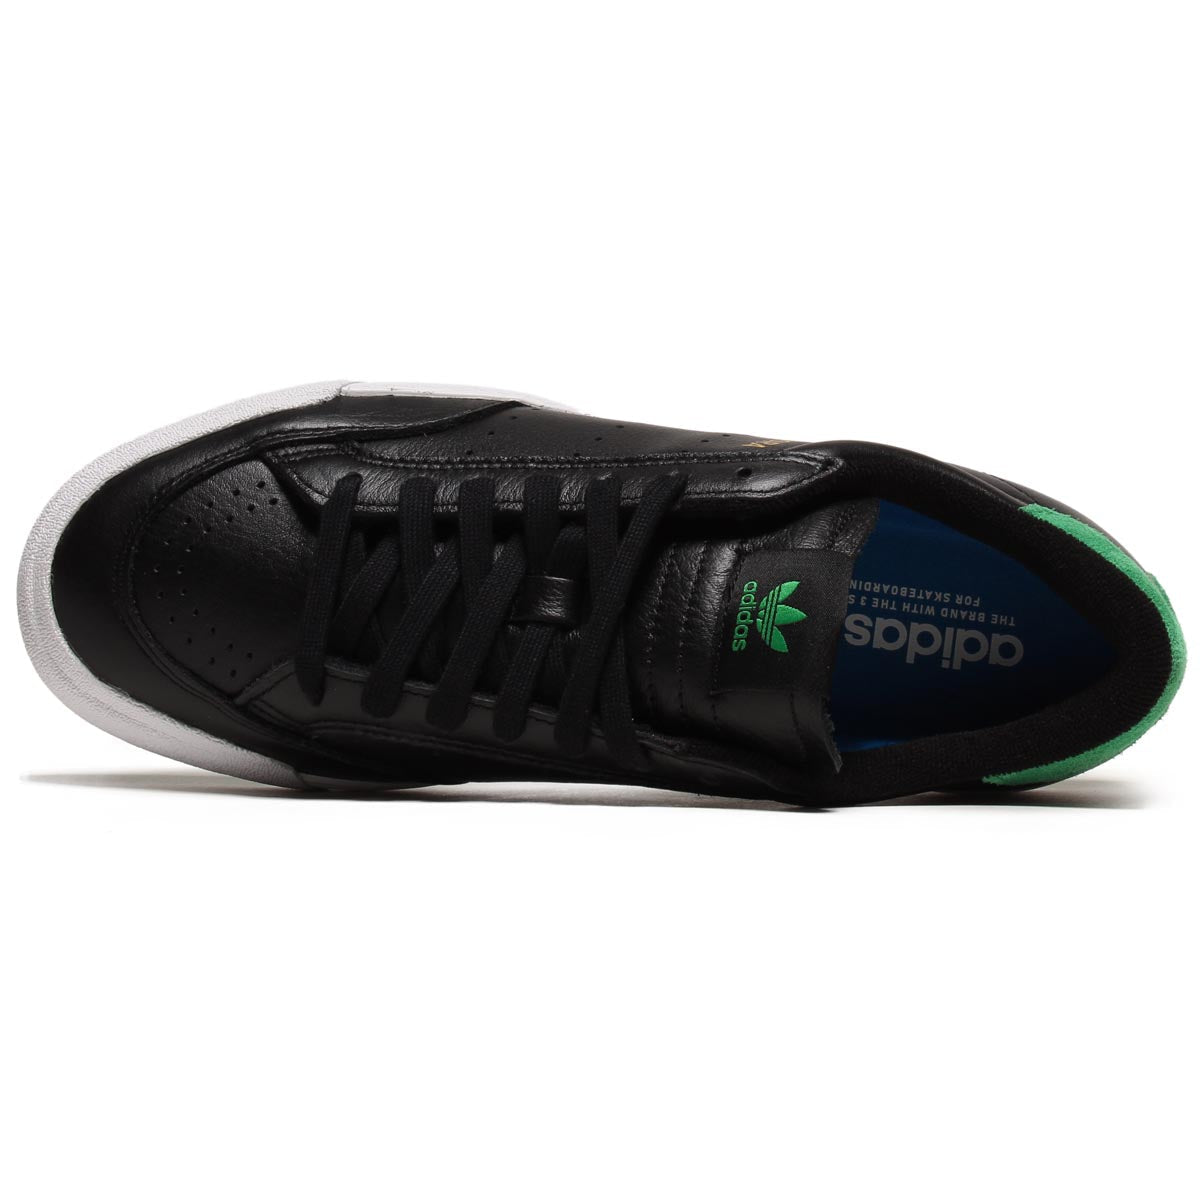 Adidas Nora Shoes - Black/Green/White image 3